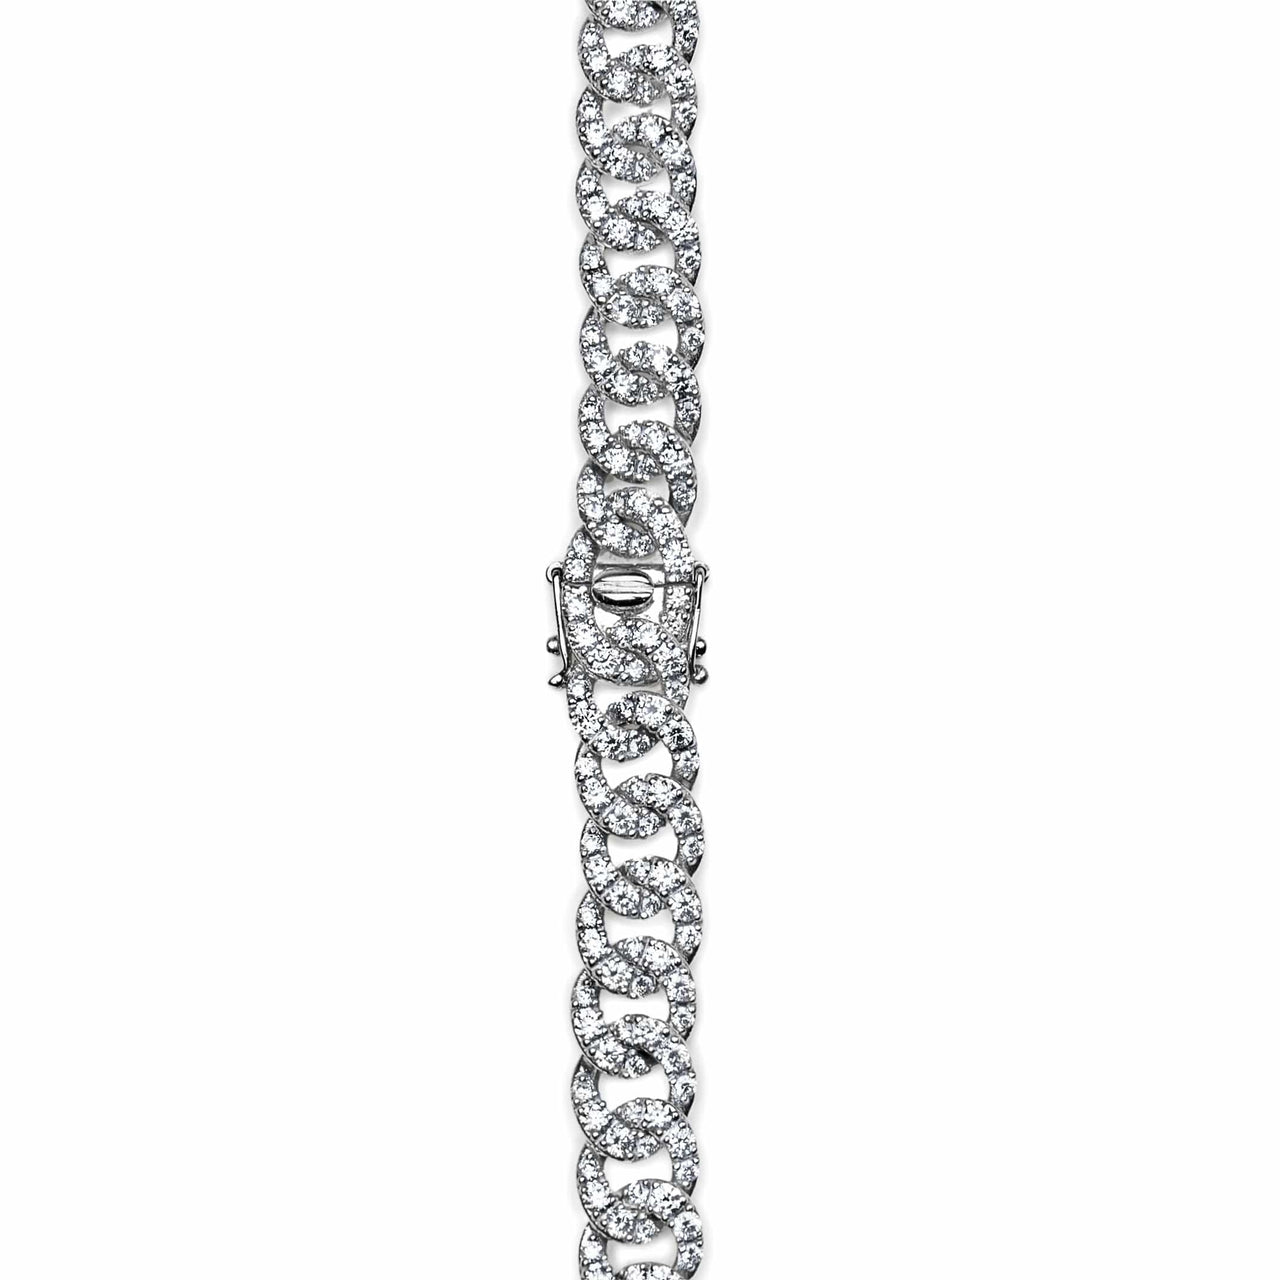 Pave Diamond White Gold Chain Link Necklace Wrist Aficionado